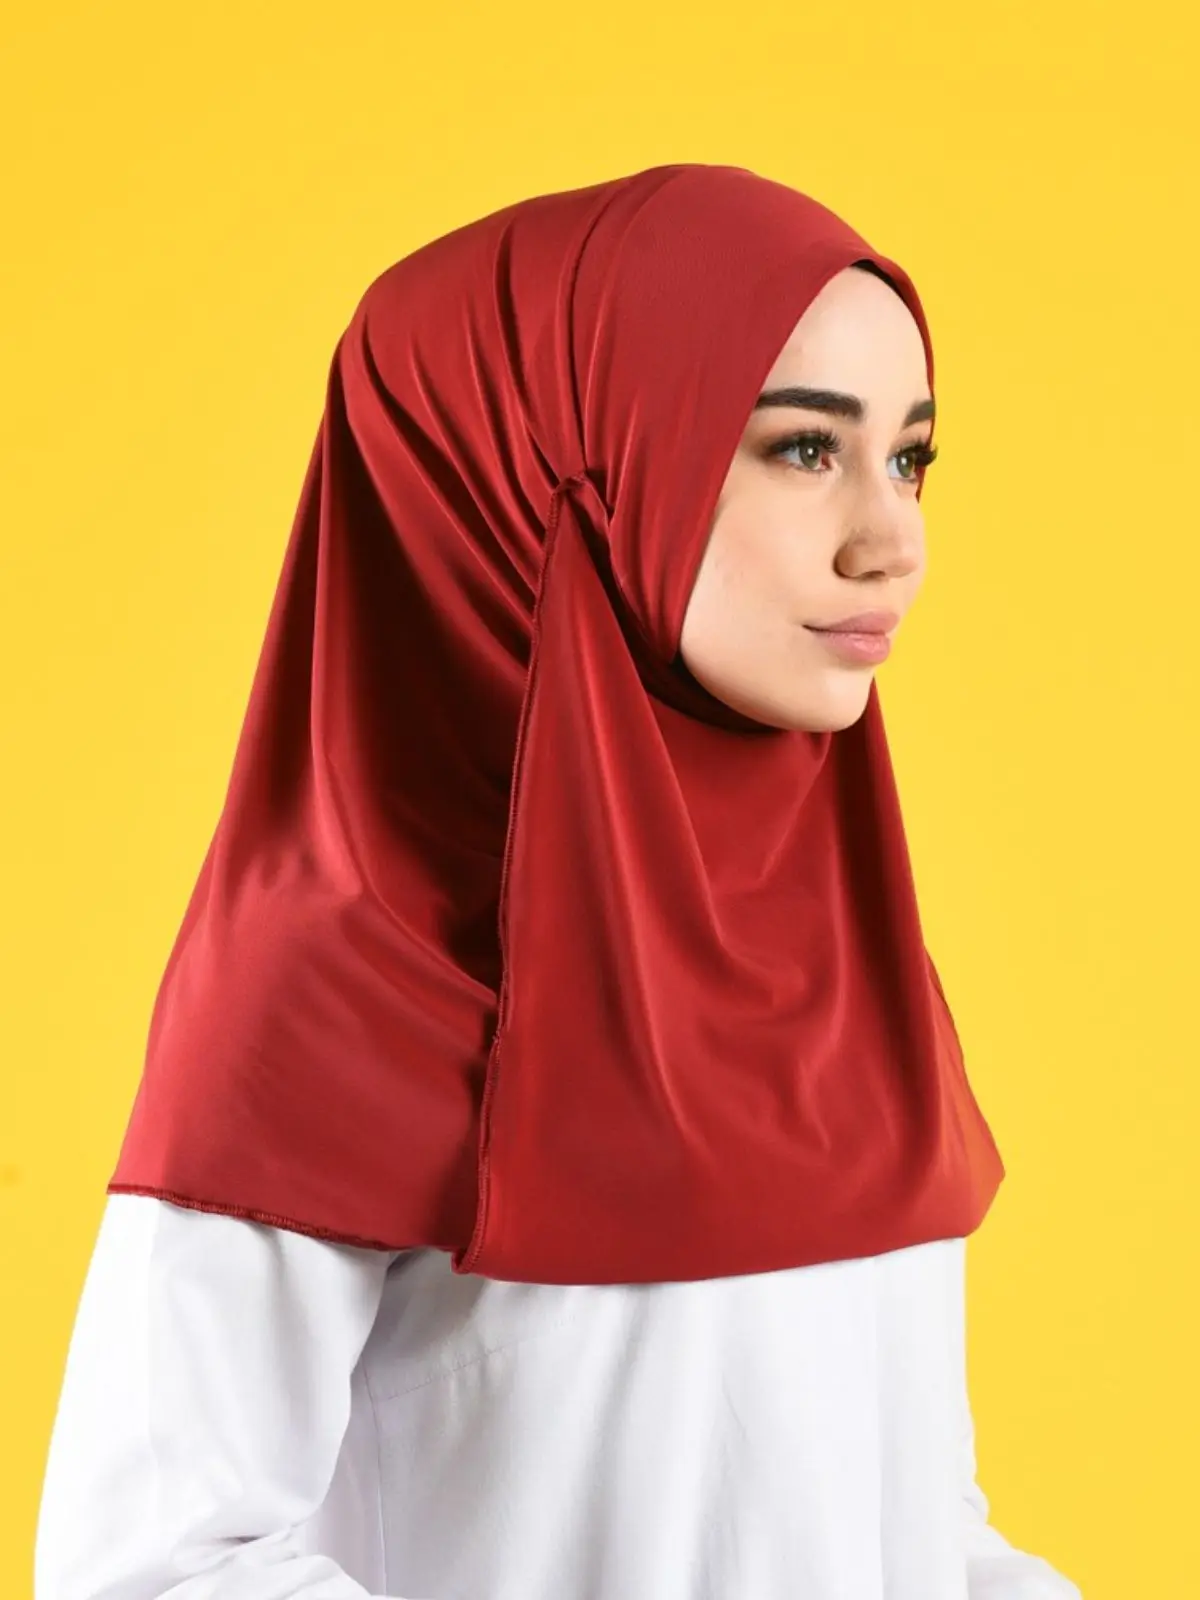 

Scarf Tunic Sandy Fabric Plain Seasonal Comfortable Useful Women Muslim Fashion Hijab Clothing Stylish Comfortable Standard